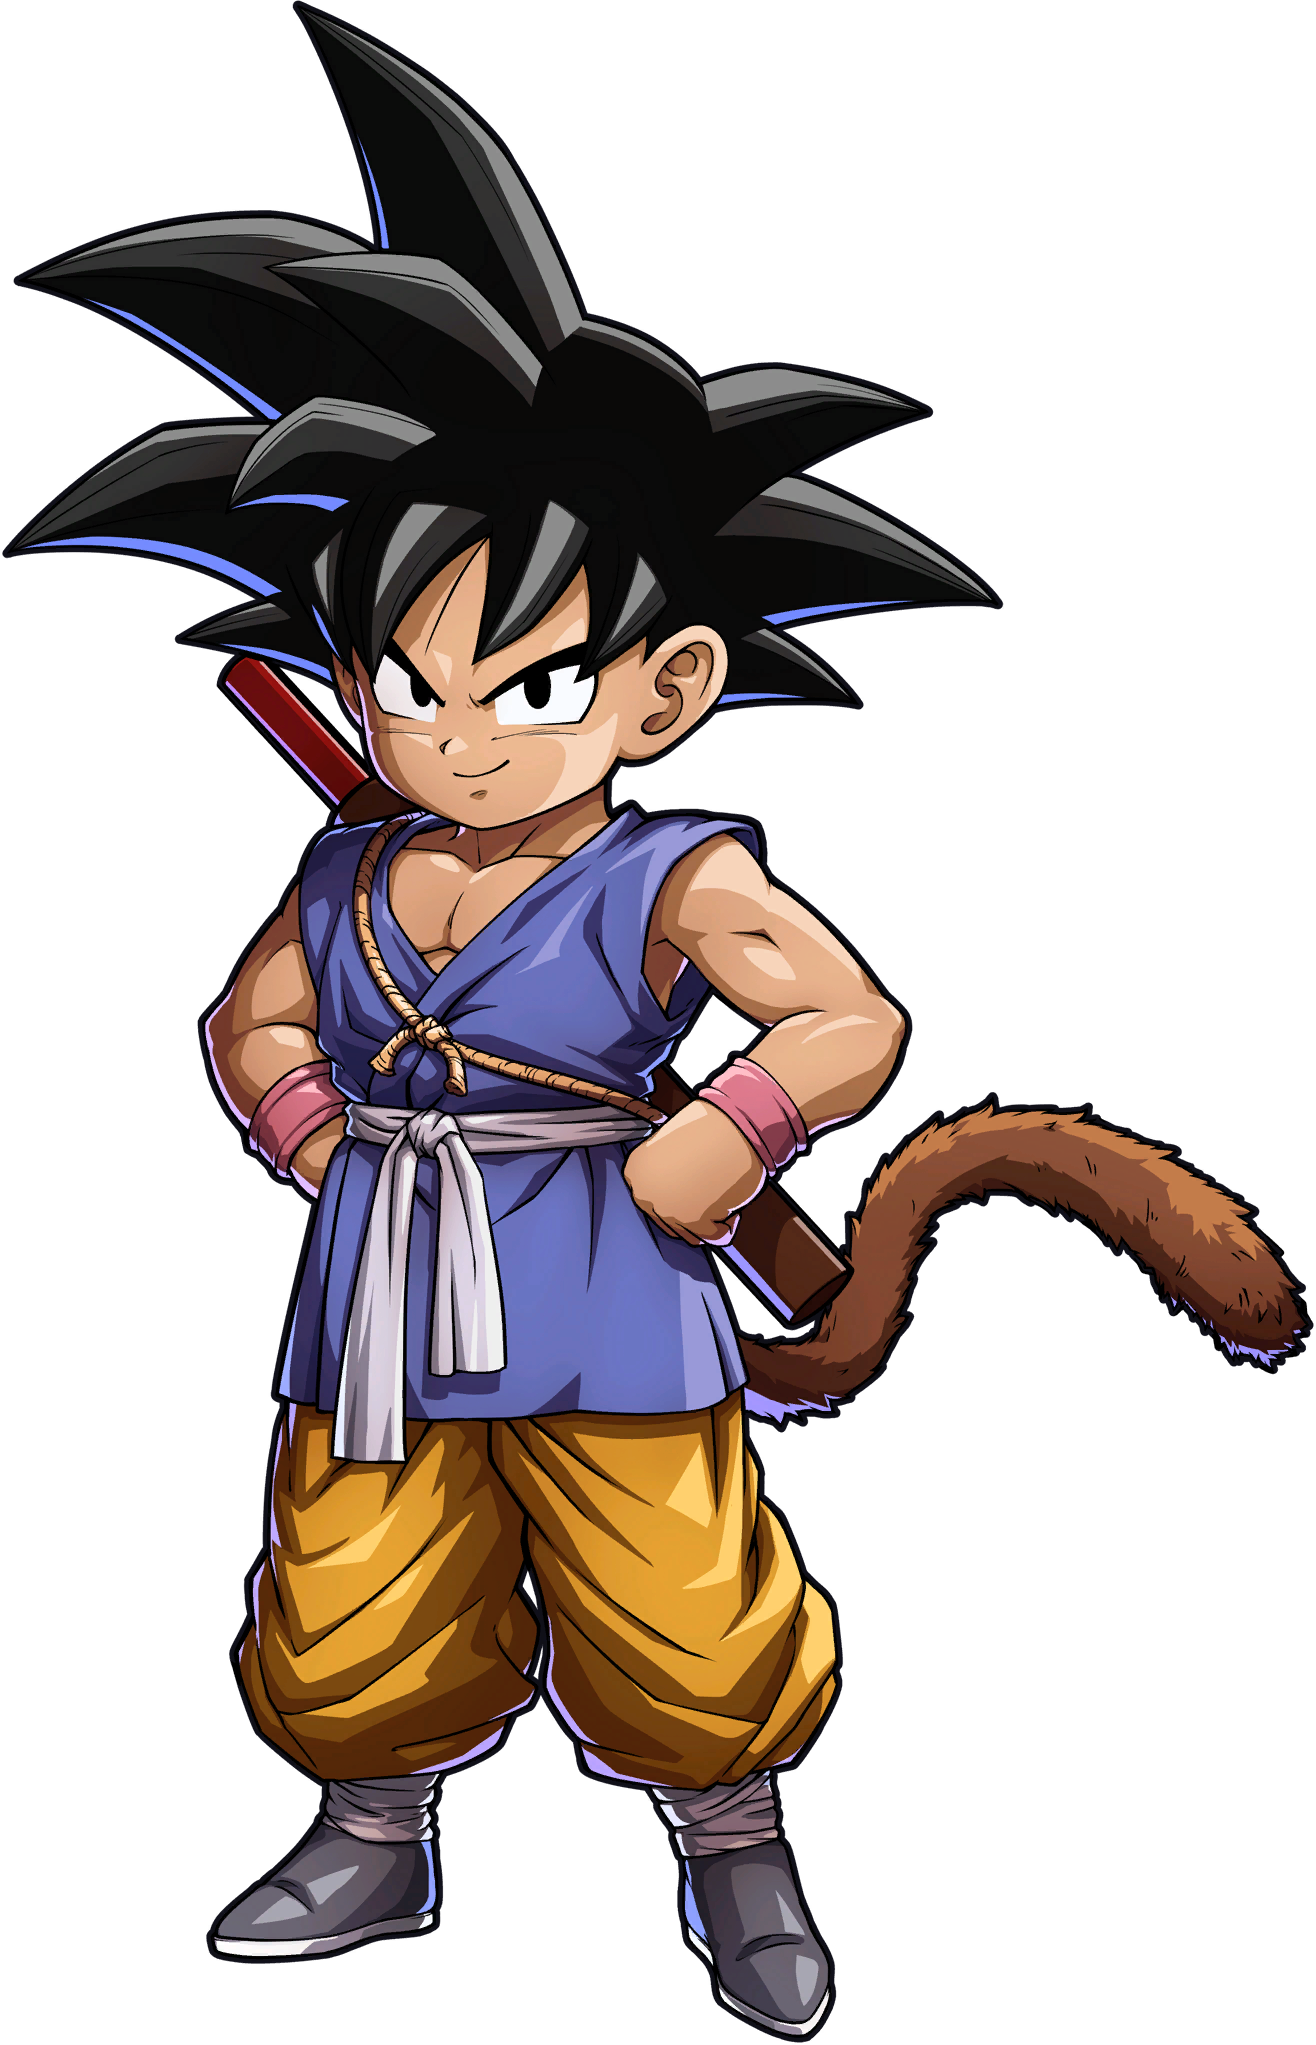 Kid Goku Gt Render Hd Fighterz By Maxiuchiha22 On Deviantart